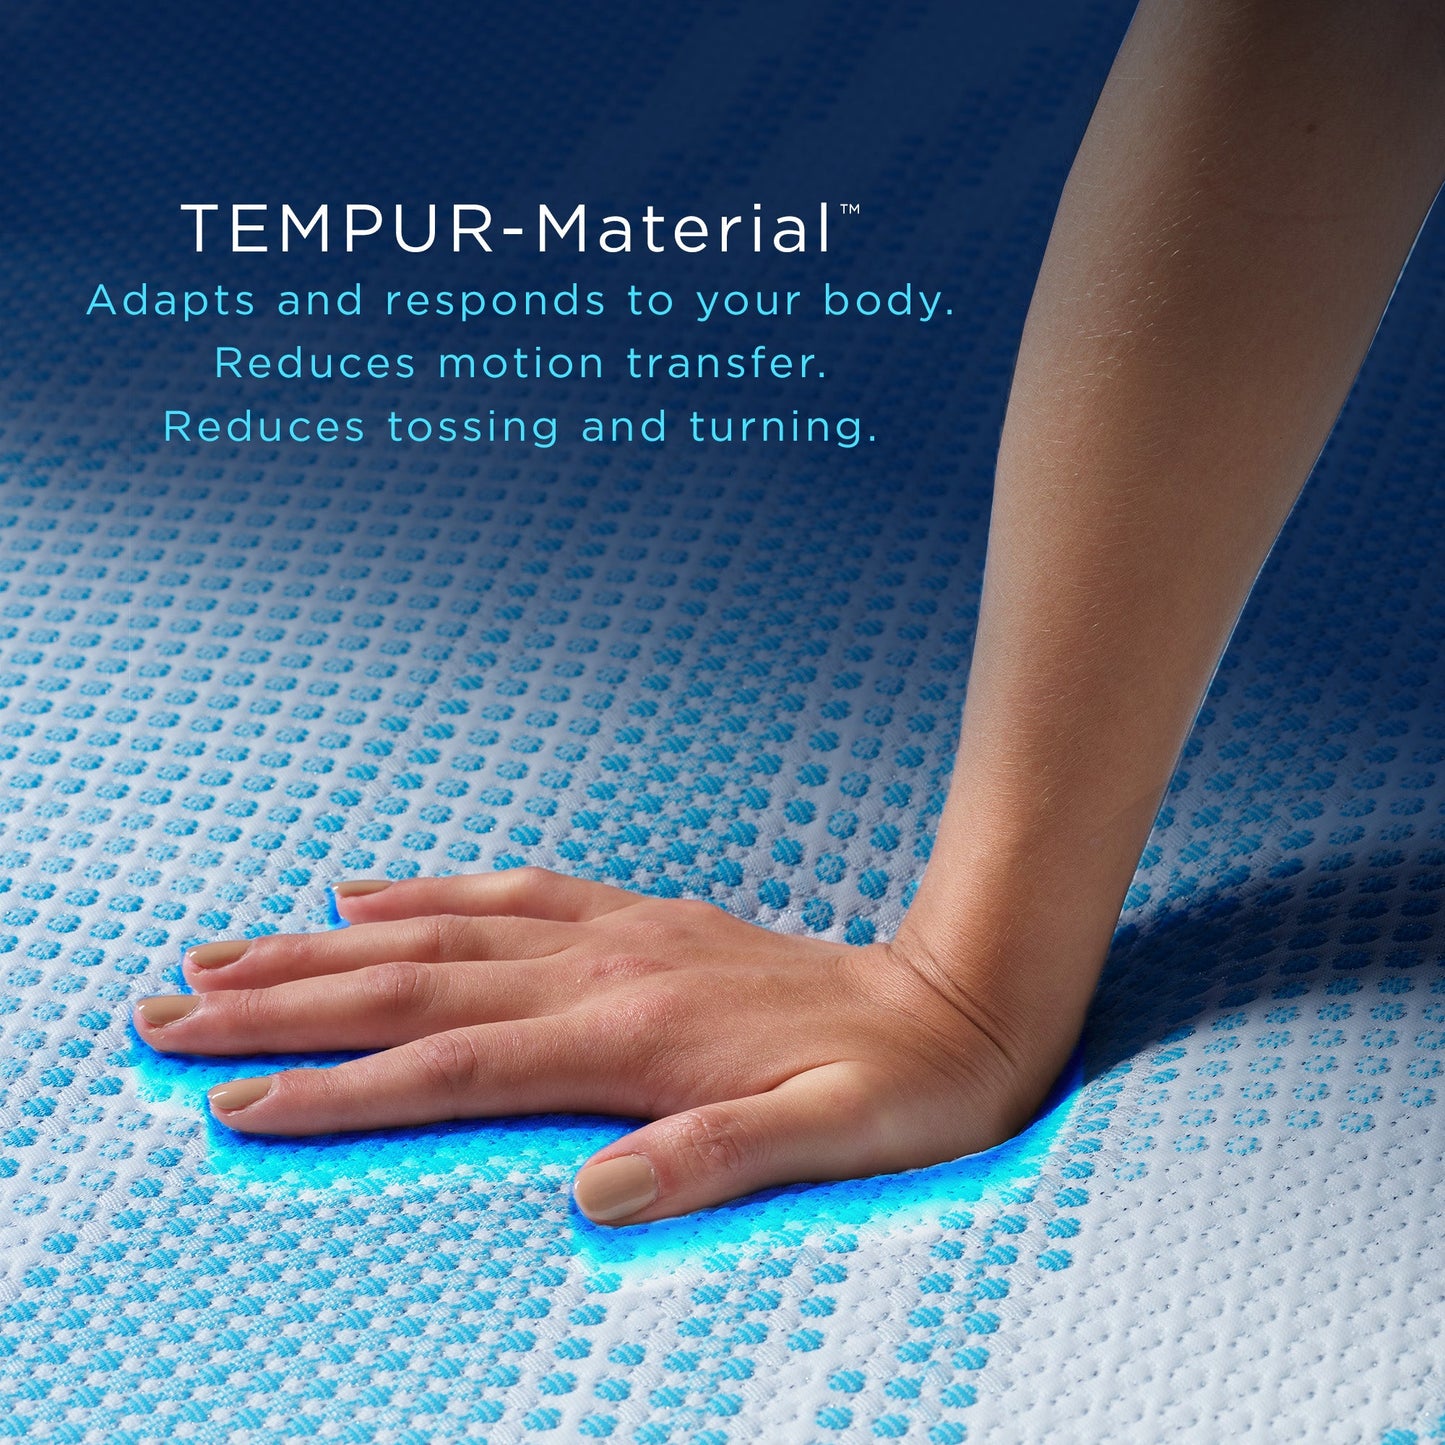 Tempur-Pedic Tempur-LuxeBreeze 2.0 Soft Mattress responds to your body